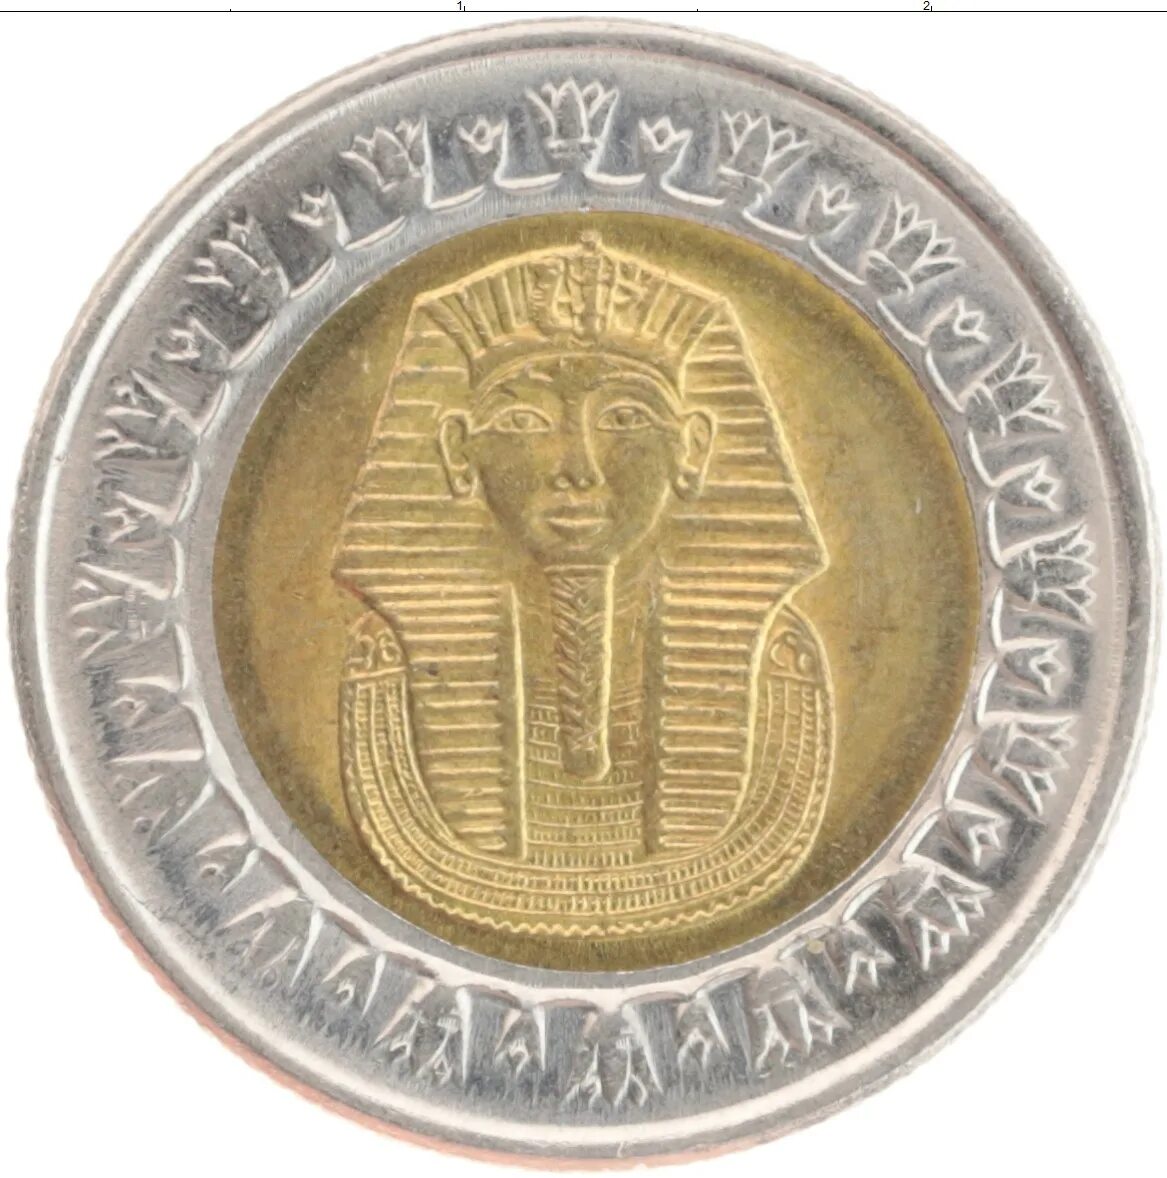 First coins. Монета Египет 1 фунт. Монета 1 фунт Египет Биметалл. Монета Египта 1 паундс. Монеты Египет 1 фунт 2008.